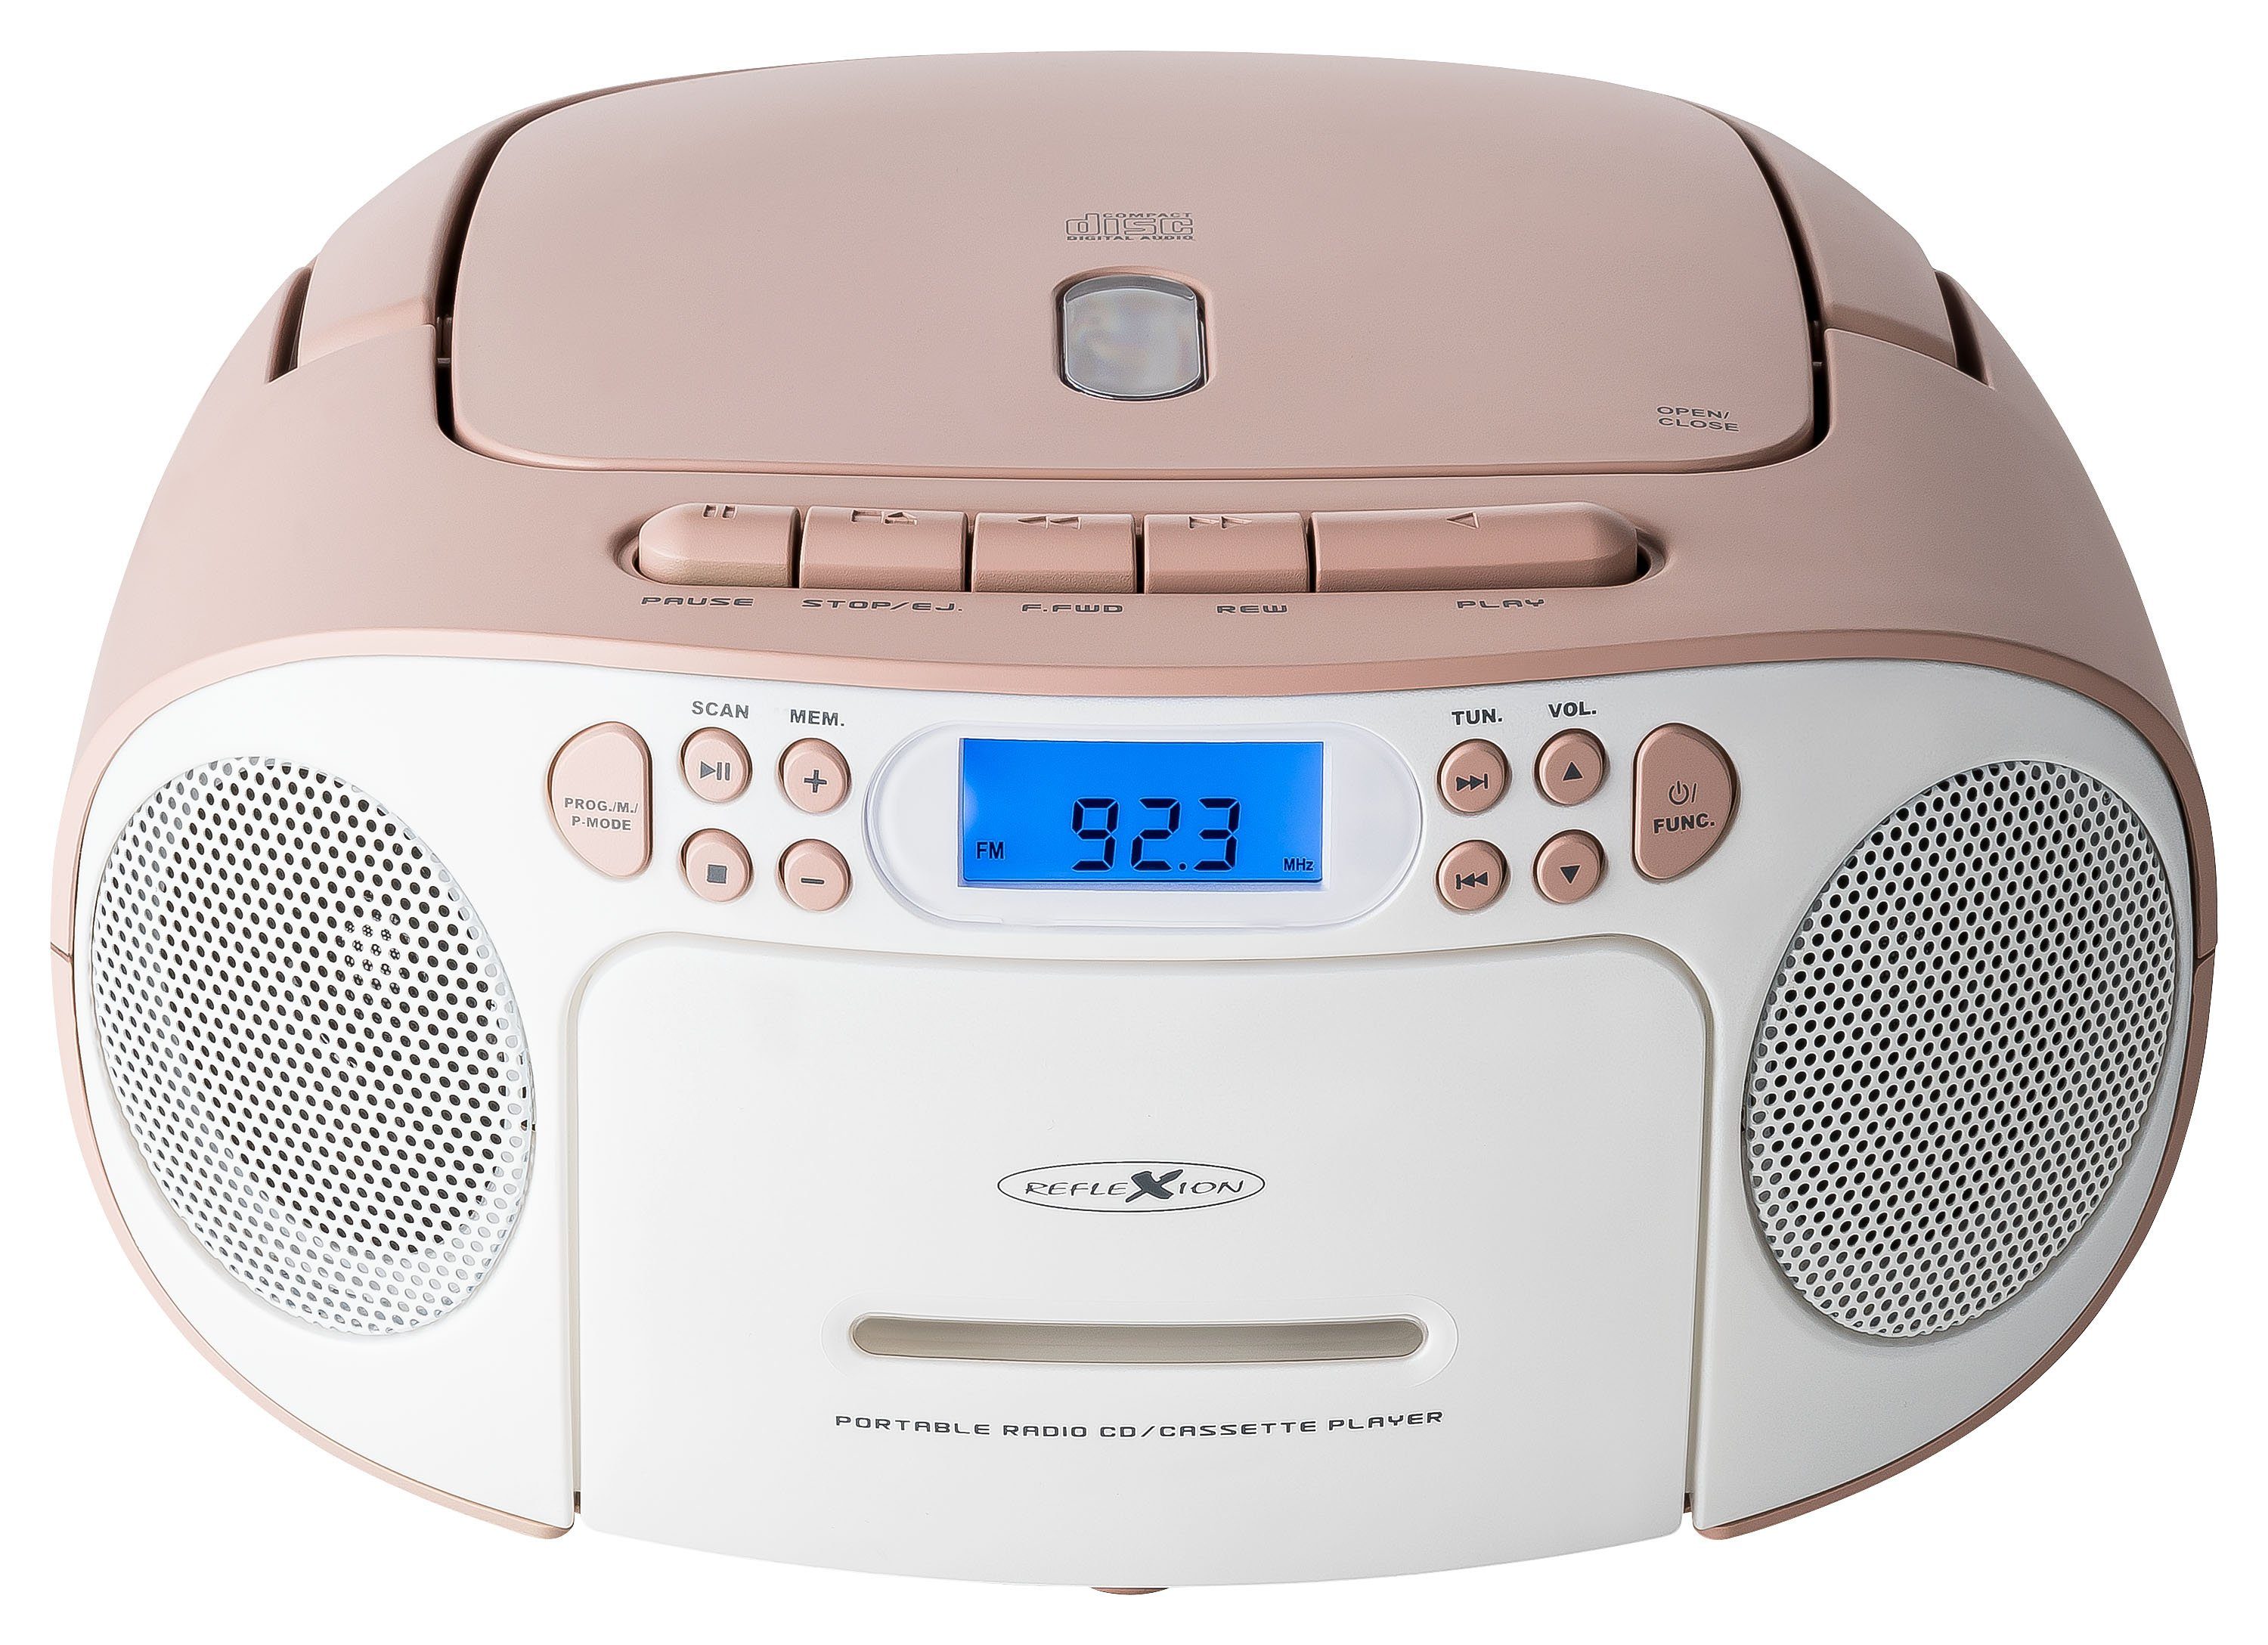 20 (UKW Stereo Tragbare Boombox LCD-Display, PLL Boombox AUX-Eingang, Radio, W, Reflexion CD/Radio/Kassette, weiß/pink Kopfhörer-Anschluss) RCR2260